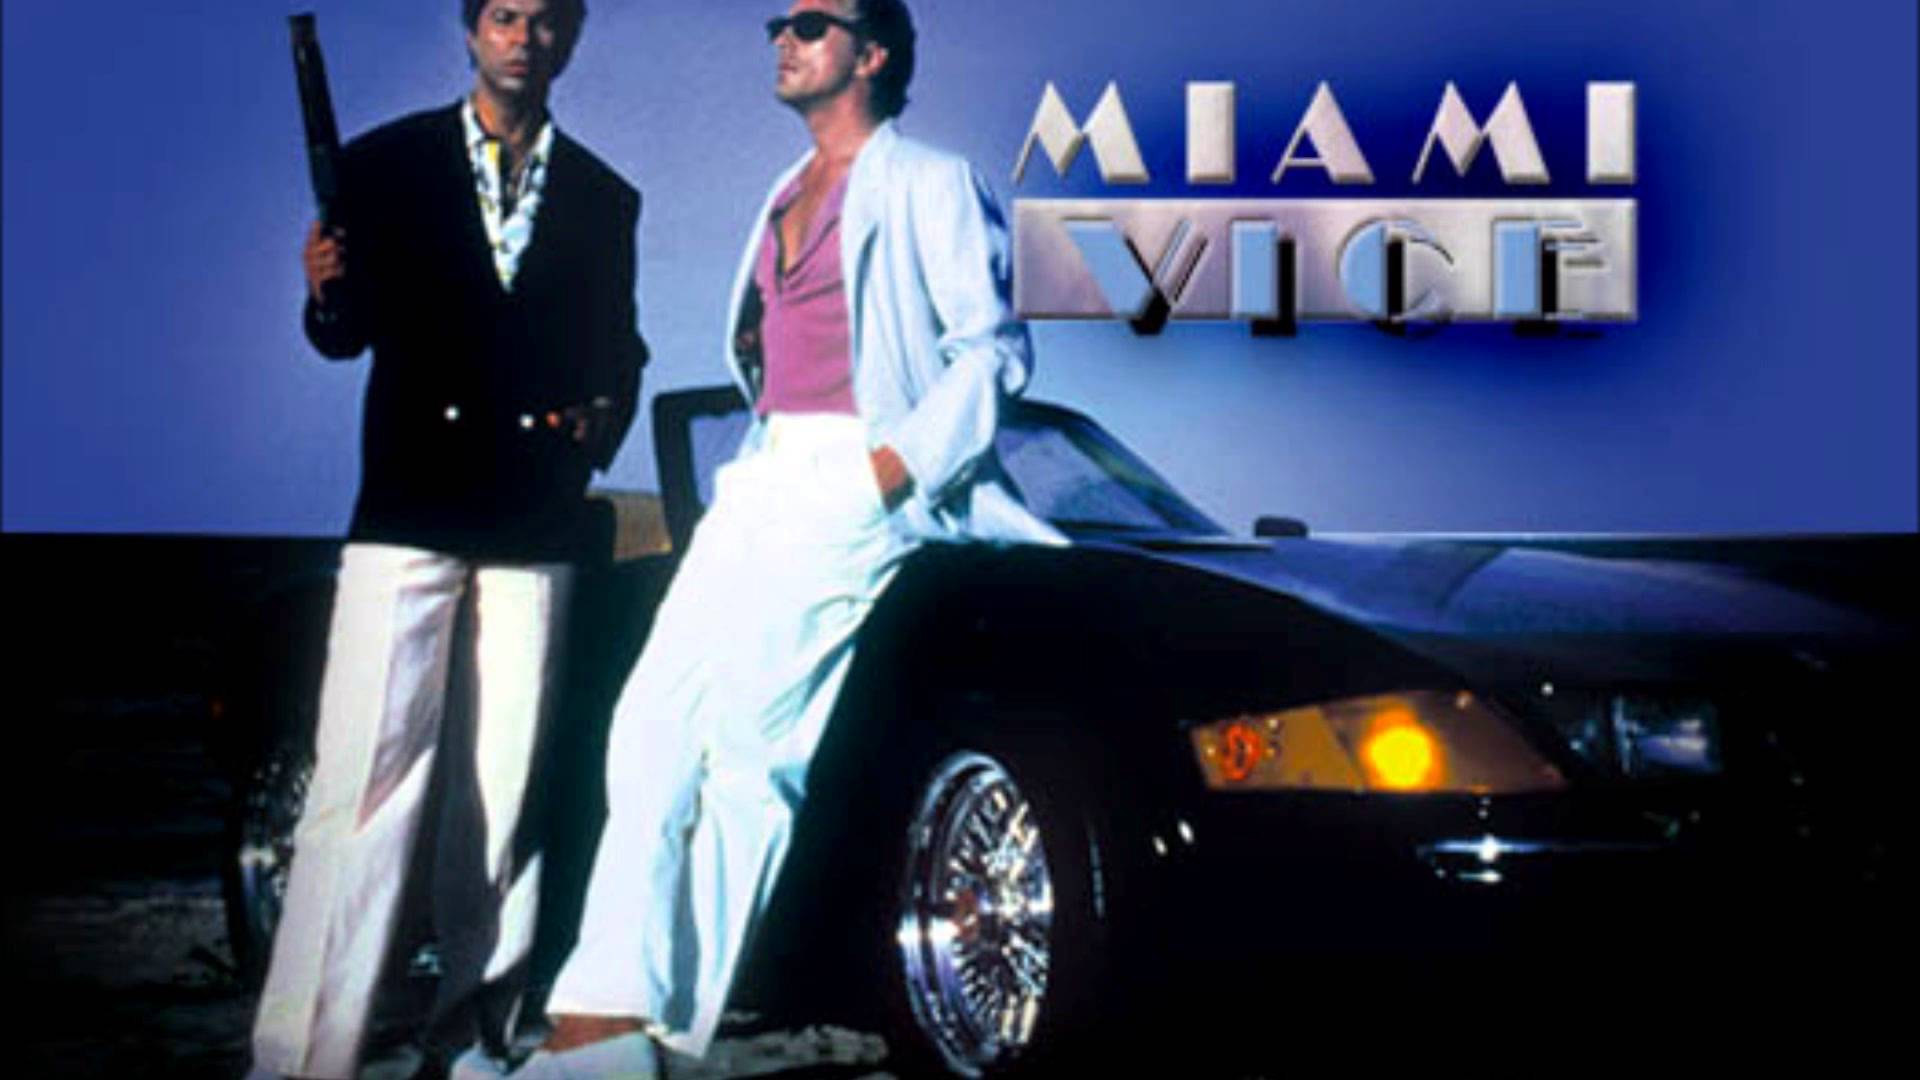 99+ Miami Vice Wallpapers on WallpaperSafari